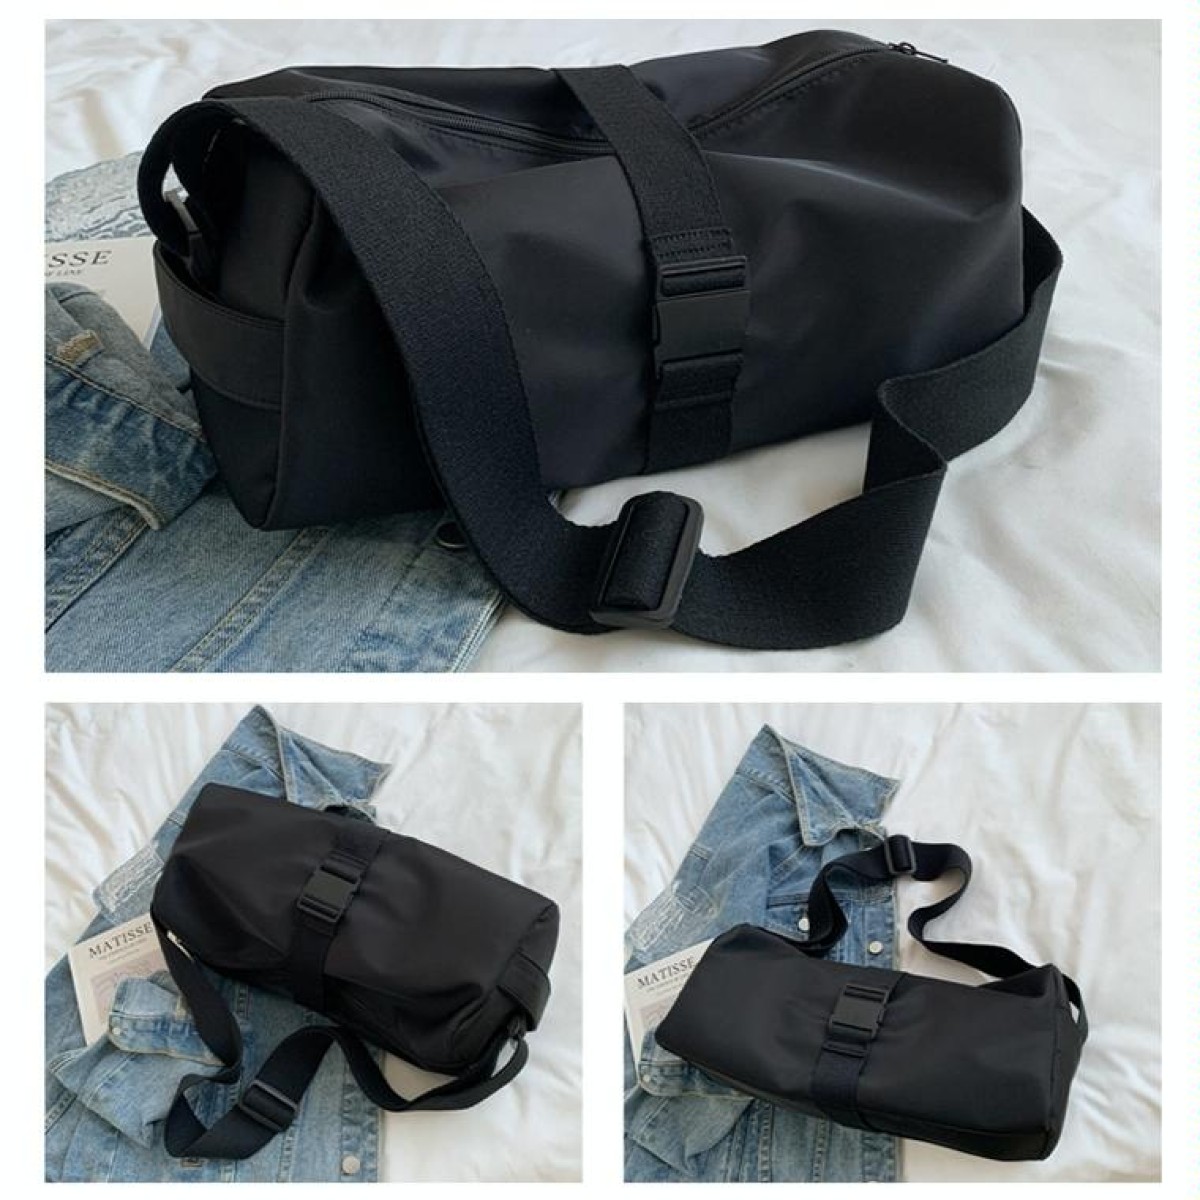 Nylon Waterproof Travel Crossbody Bag Leisure Sports Fitness Bags(Black)